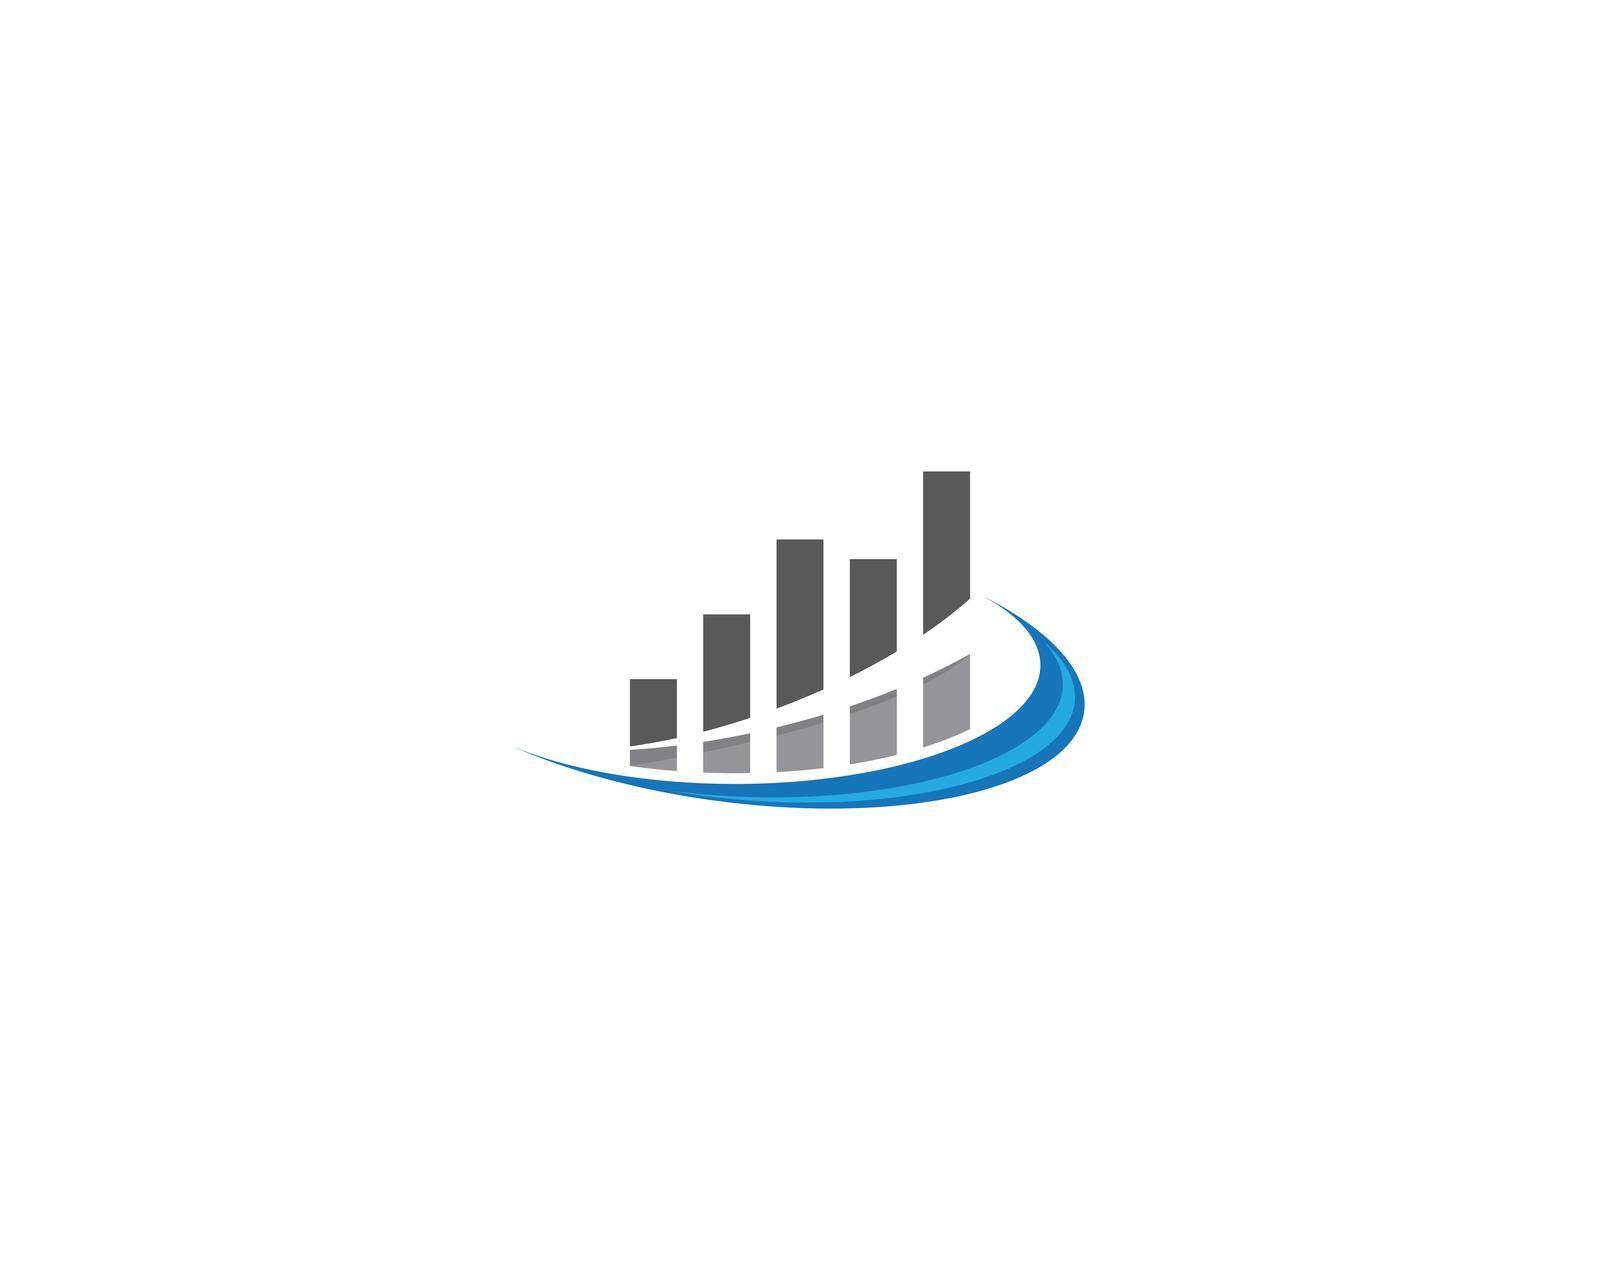 Business Finance Logo template vector icon illustration